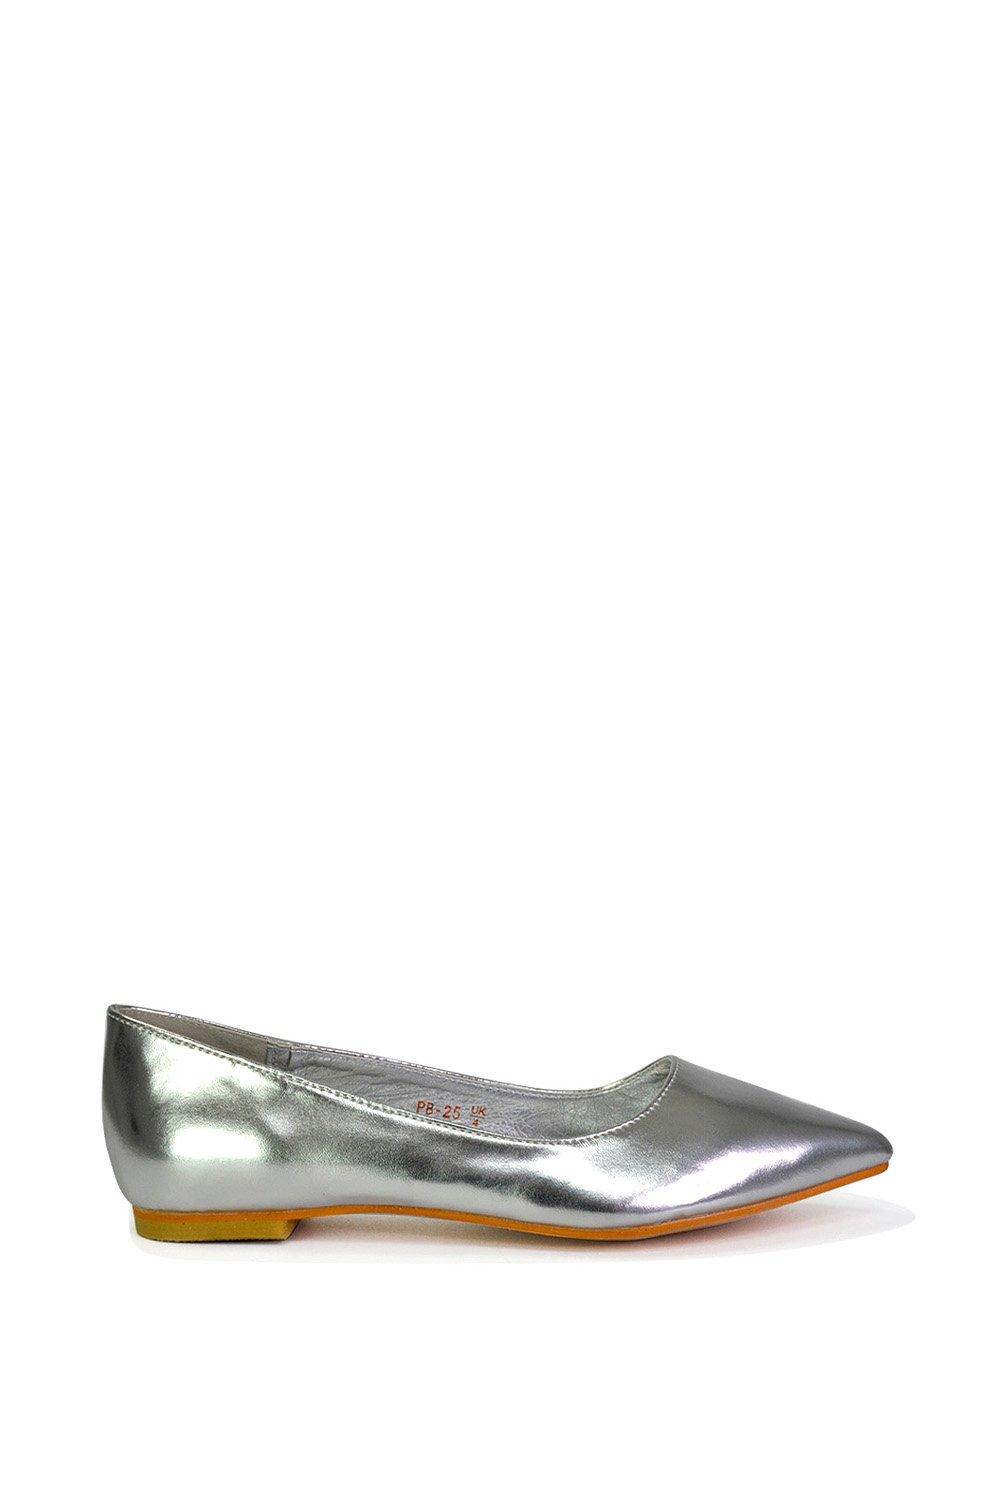 XY London Women's 'Bubbles' Pointed Toe Slip on Flat Ballerina Pump Shoes|Size: 6|metallic silver